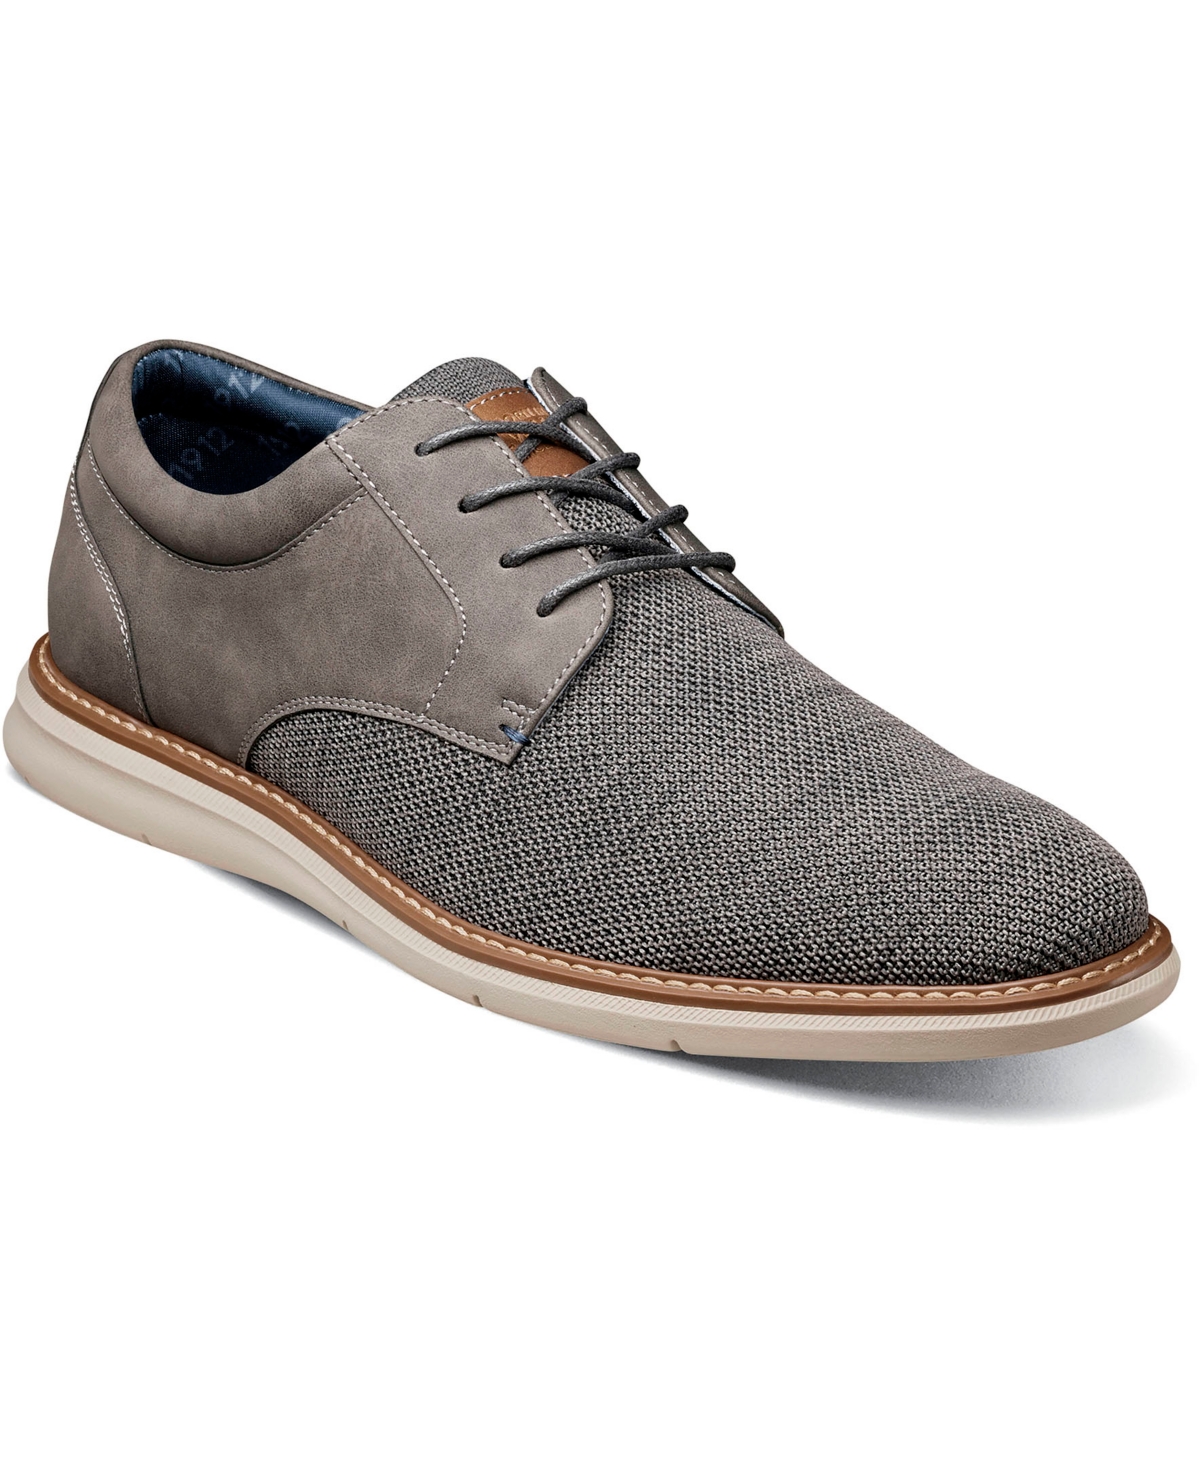 Men's Chase Knit Plain Toe Oxford Shoes - Navy Multi